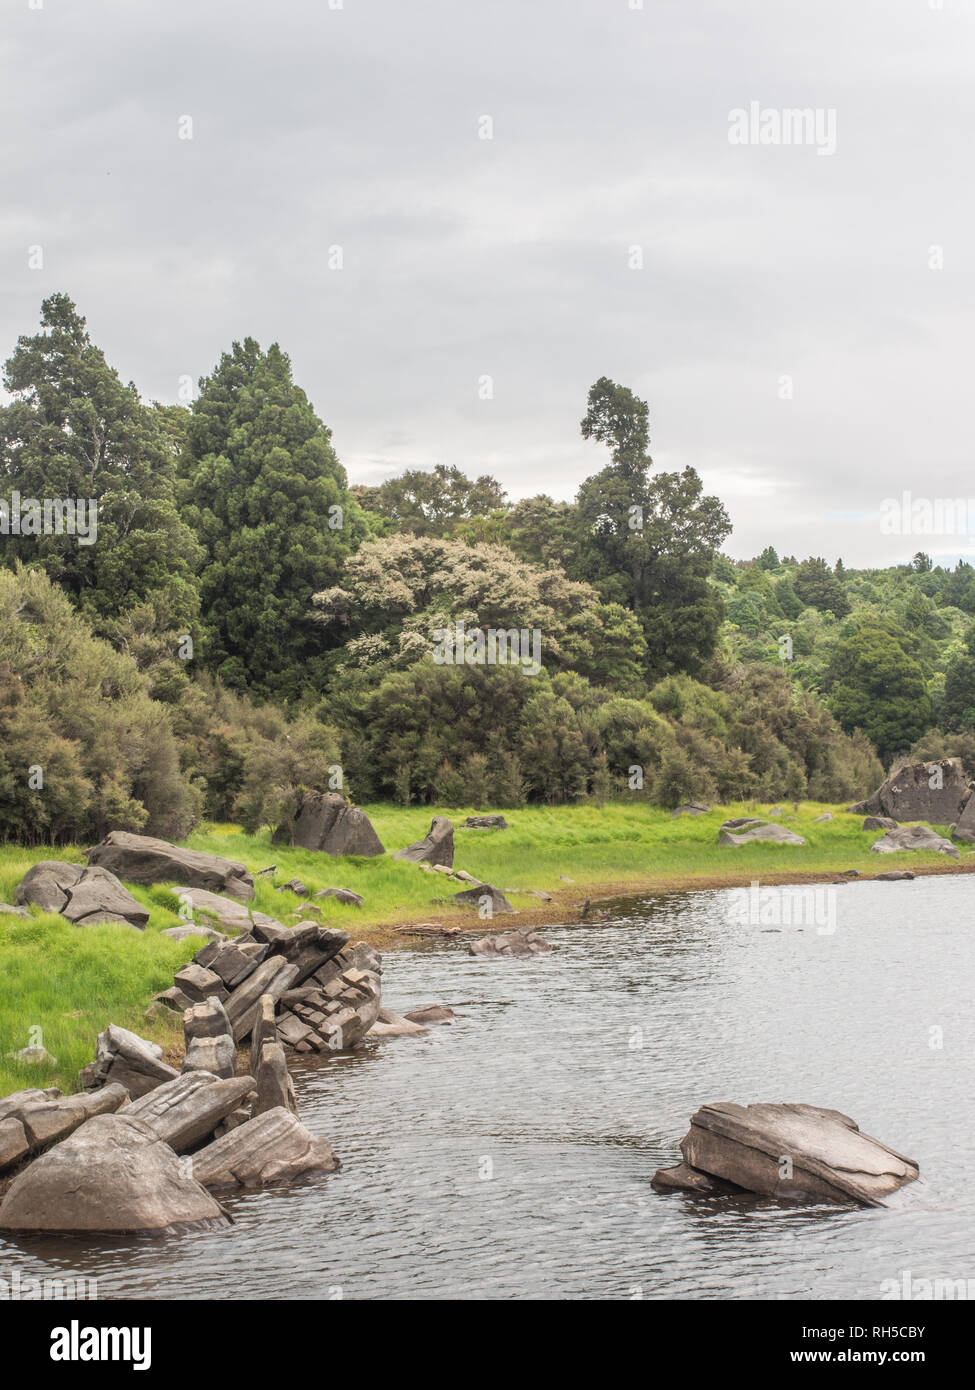 Ephemere Feuchtgebiete im Sommer, schöne ruhige Landschaft, Natur, See Kiriopukae, Te Urewera National Park, North Island, Neuseeland Stockfoto